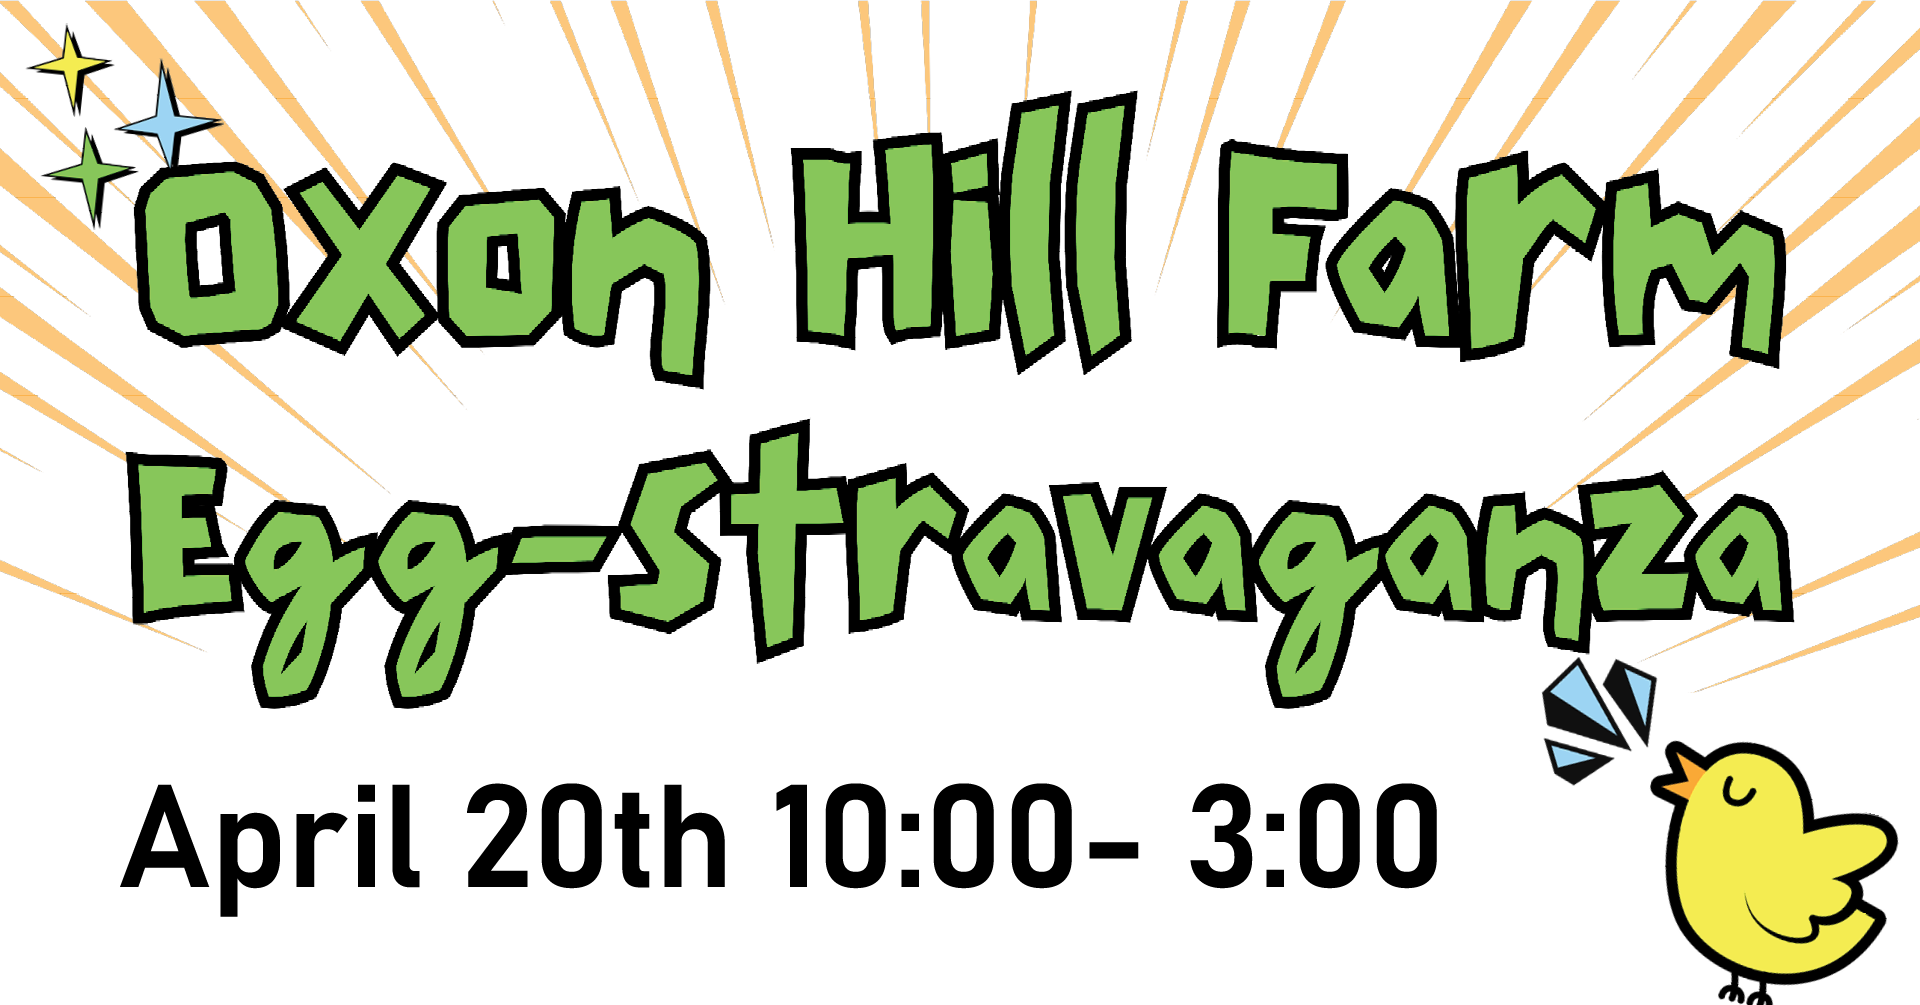 Oxon Hill Farm Eggstravganza April 20th 10:00-3:00